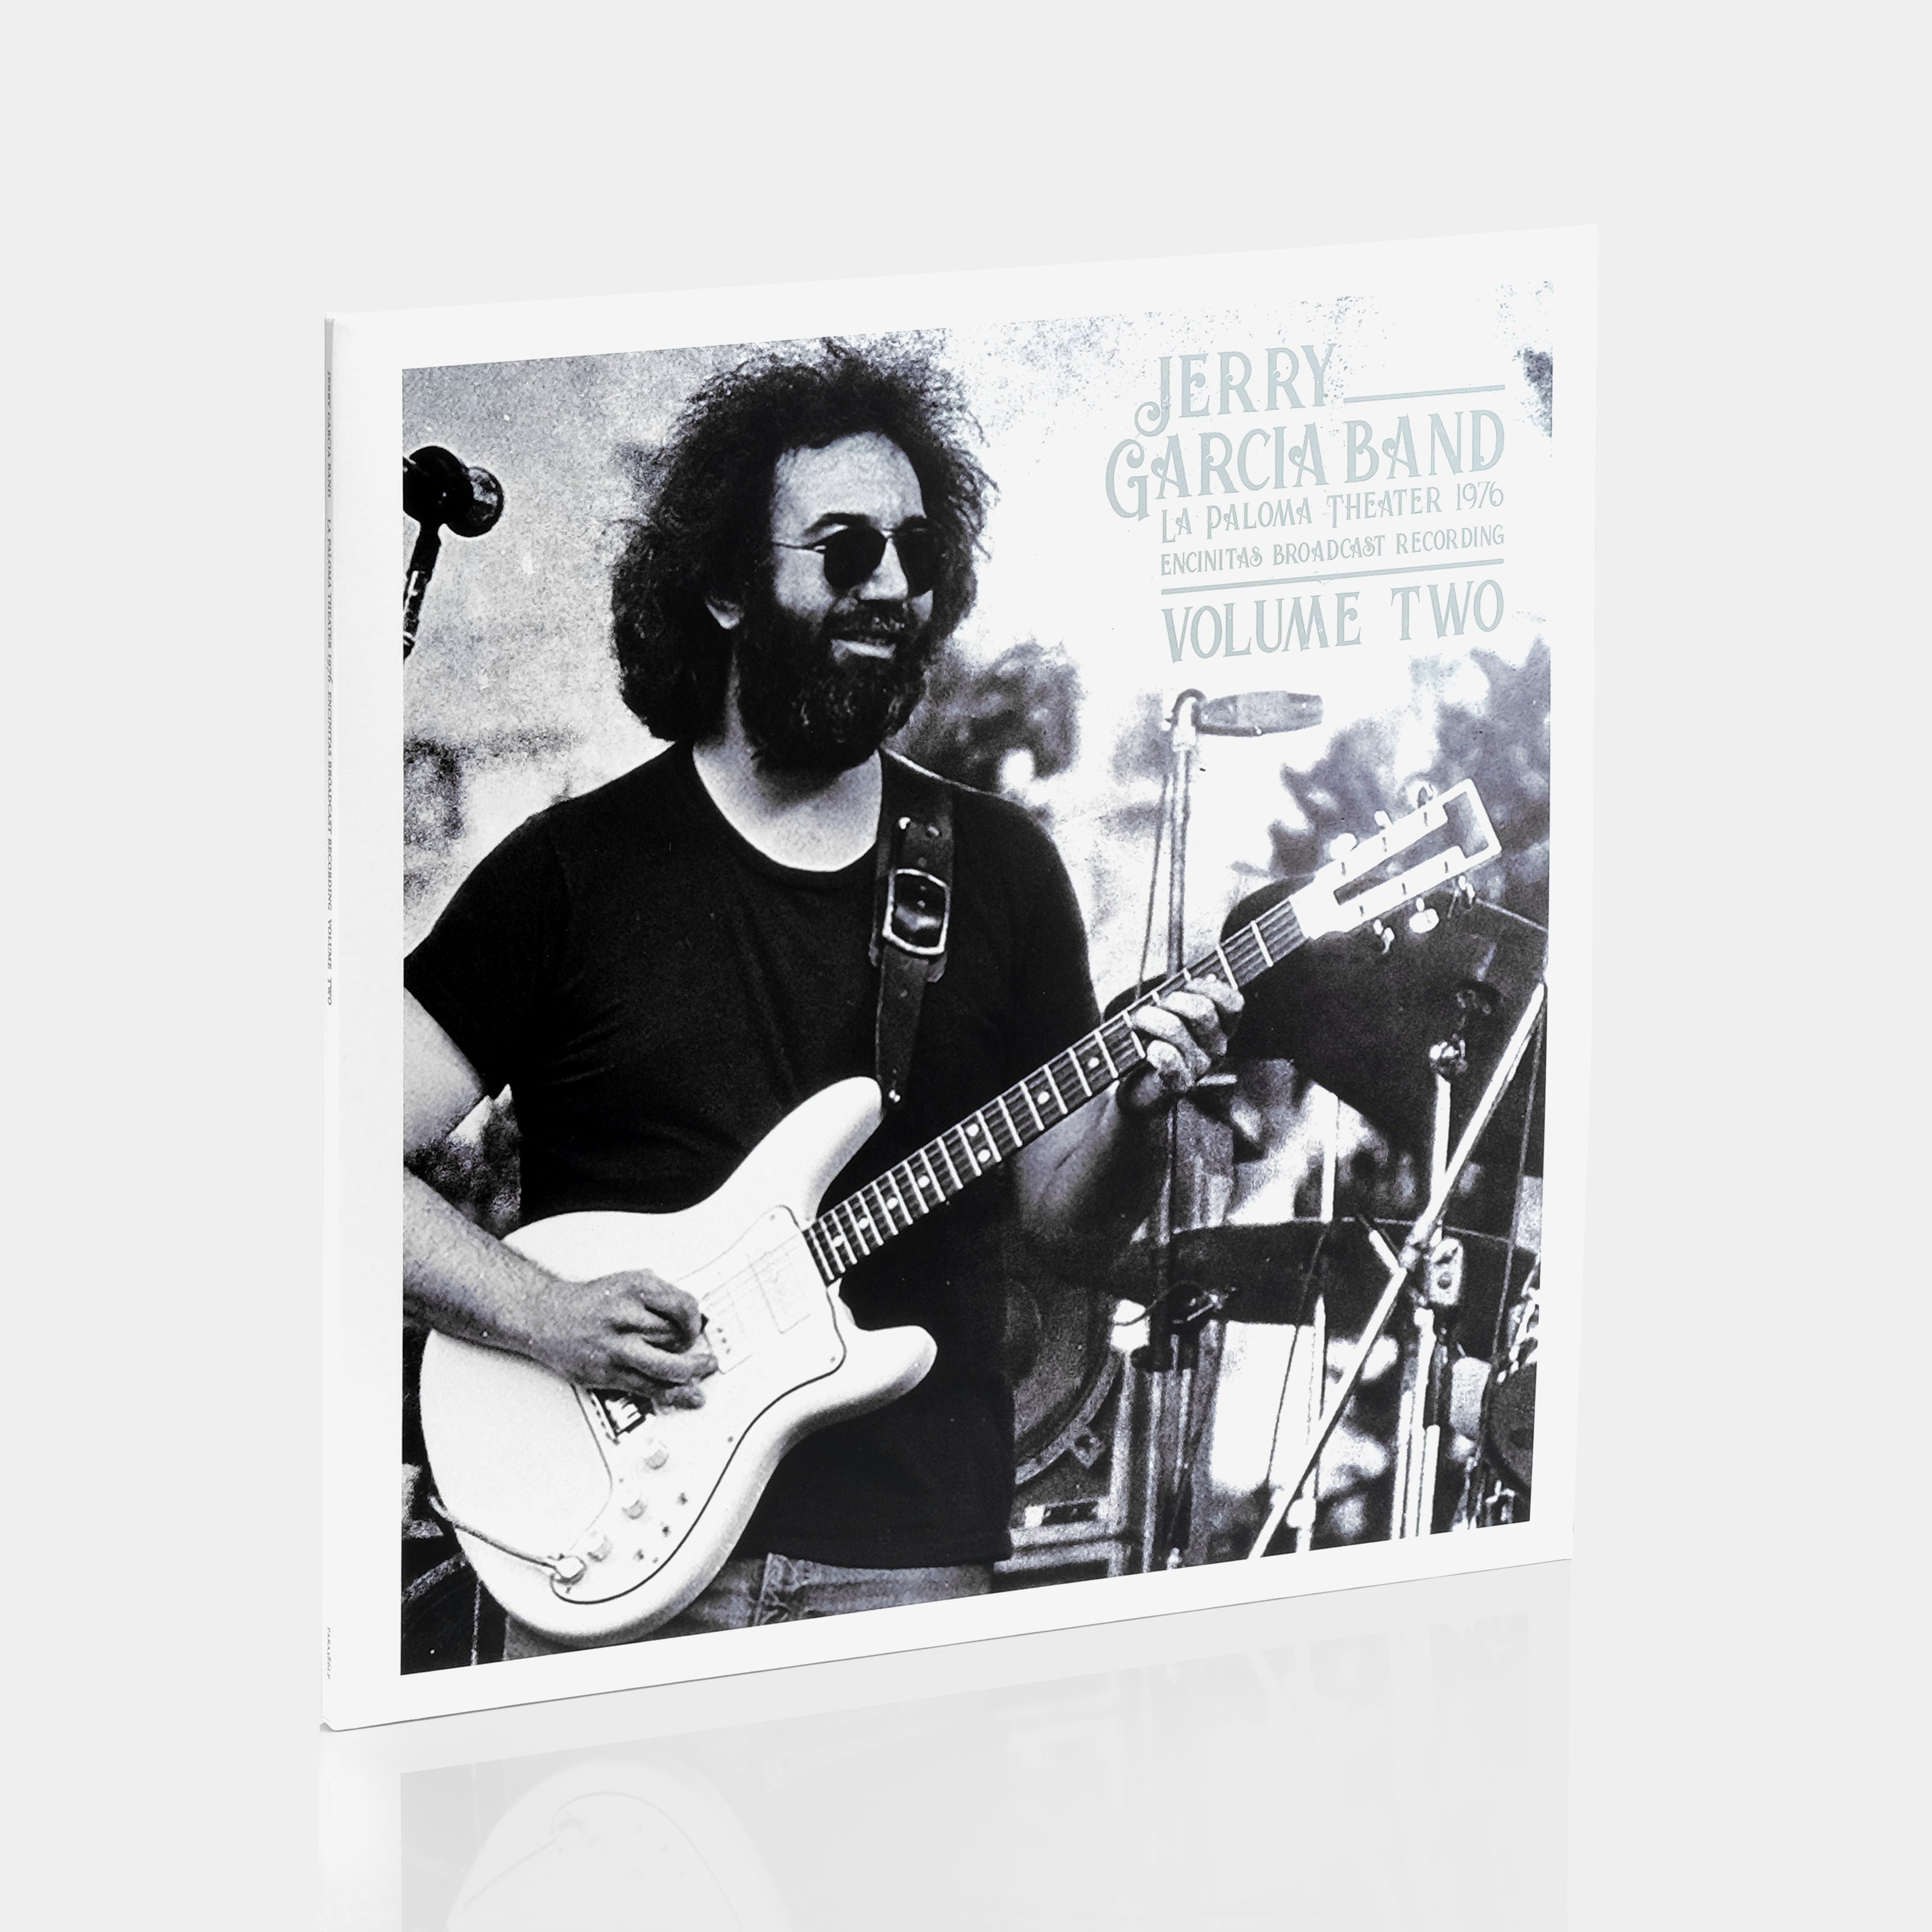 Jerry Garcia Band - La Paloma Theater 1976 Encintas Broadcast Recording Volume Two 2xLP Vinyl Record